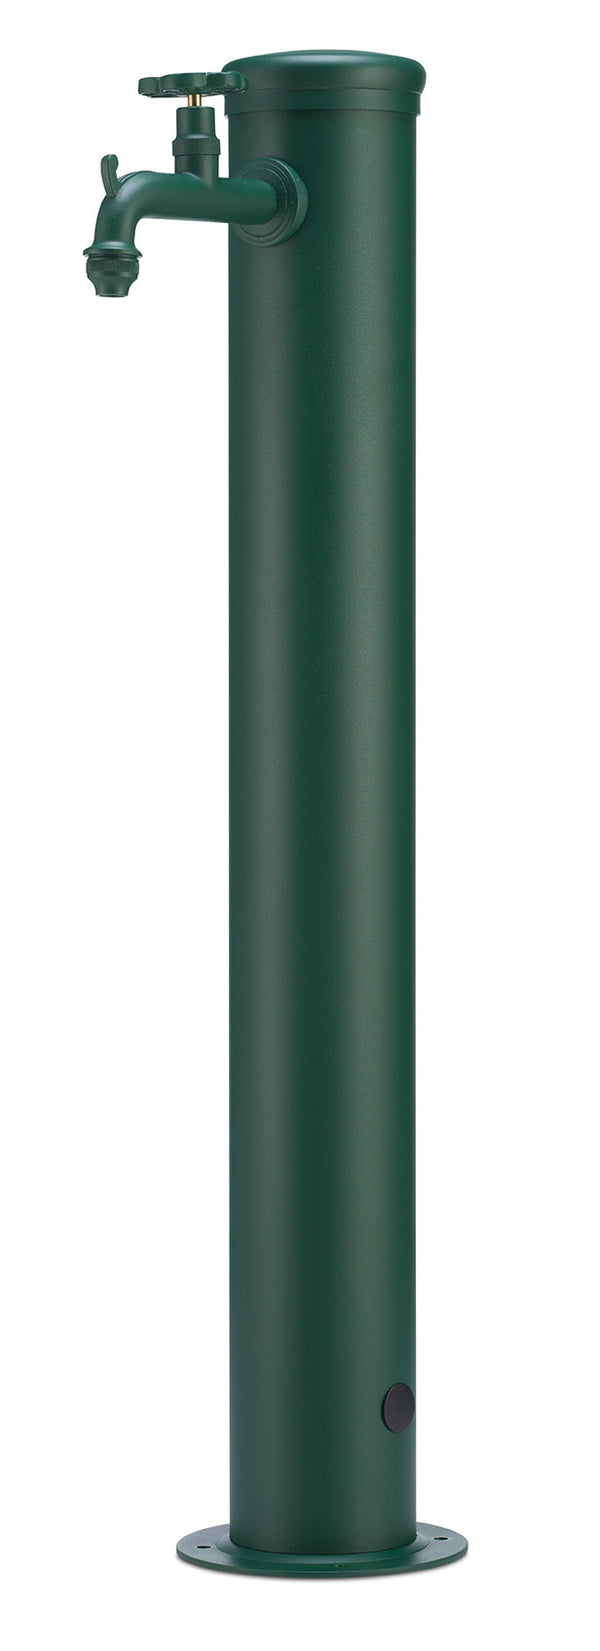 prezzo Fontana da Giardino con Rubinetto in Tinta Belfer 42/TT Verde